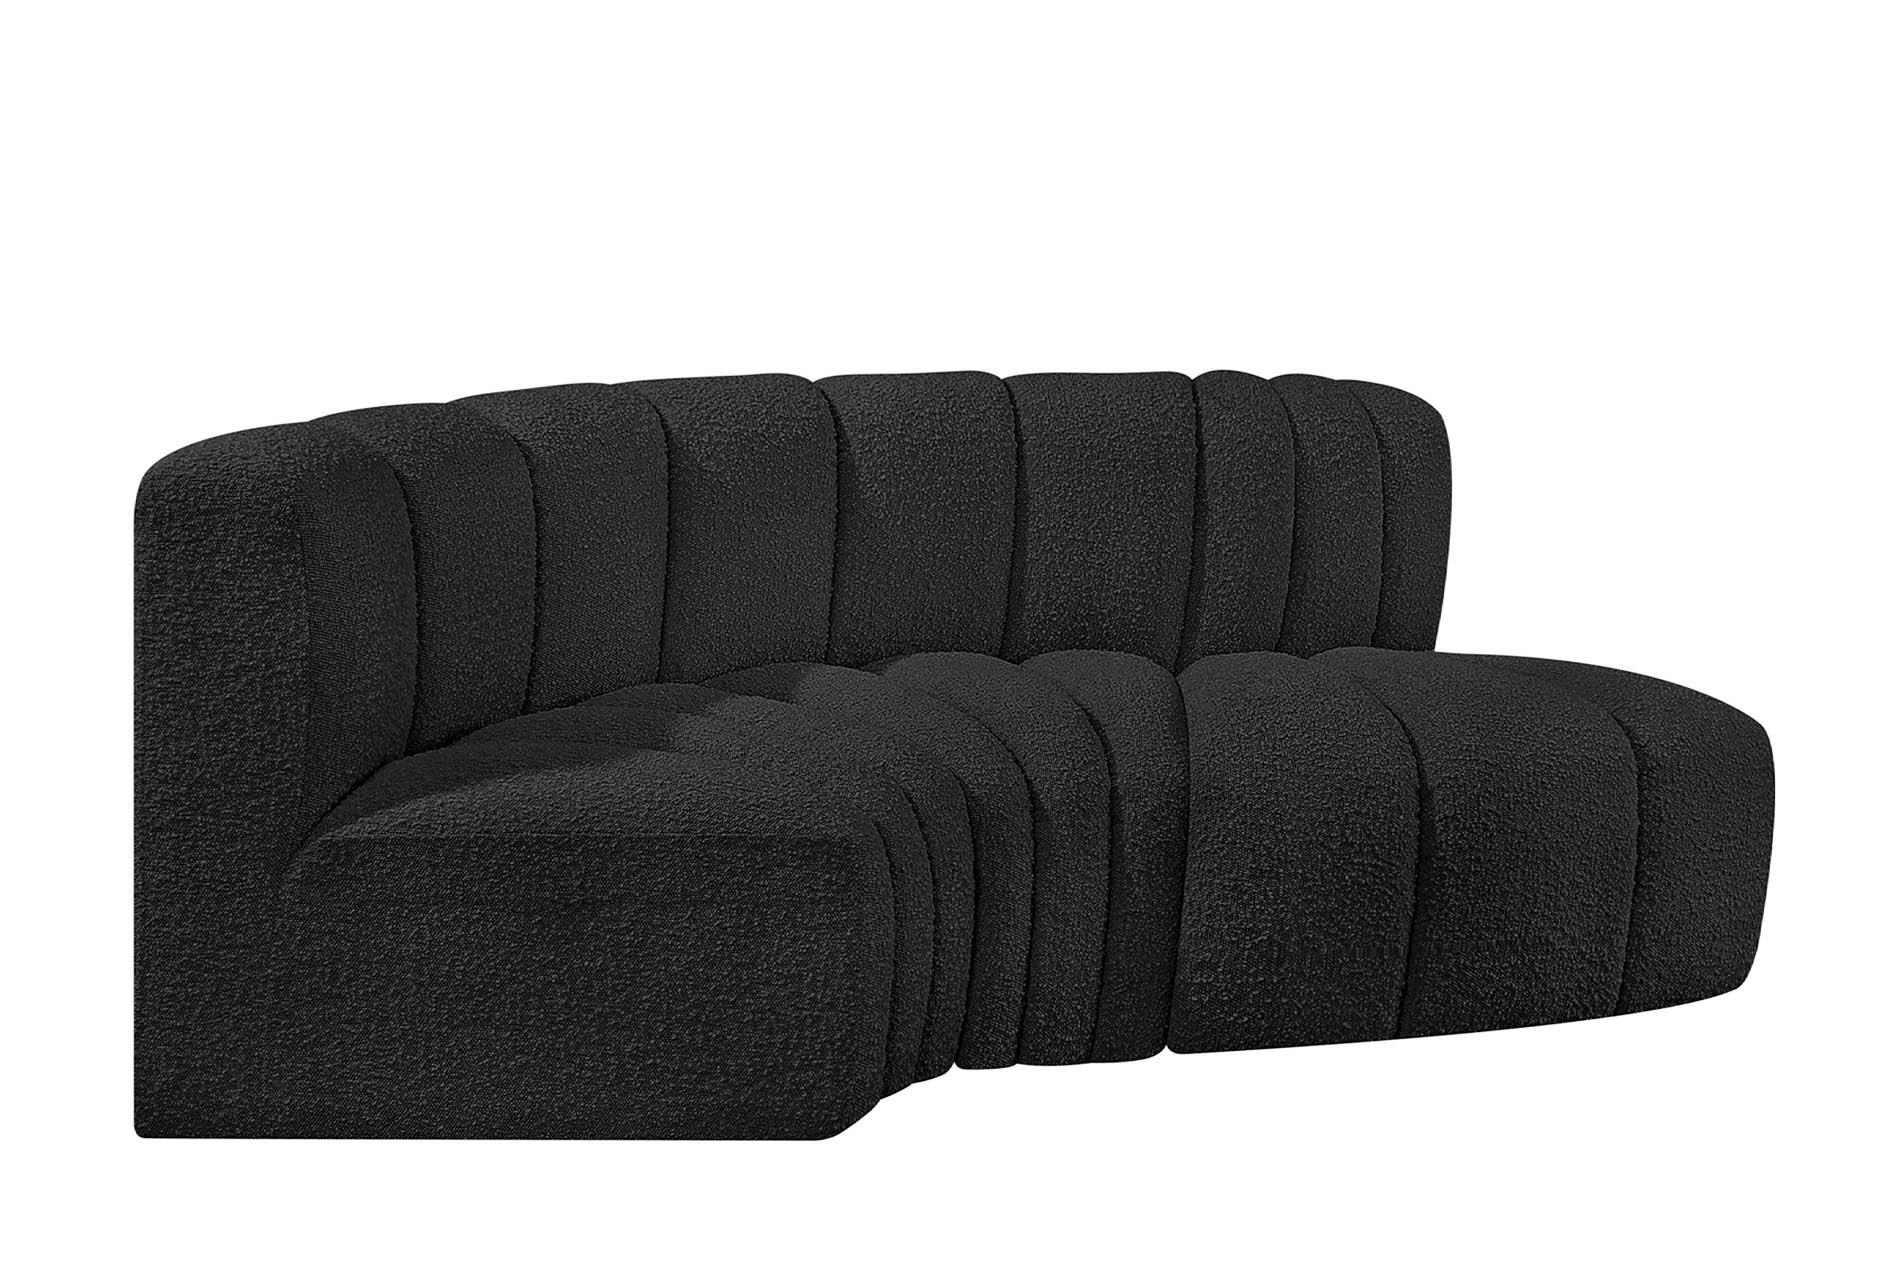 Contemporary, Modern Modular Sectional Sofa ARC 102Black-S3D 102Black-S3D in Black 